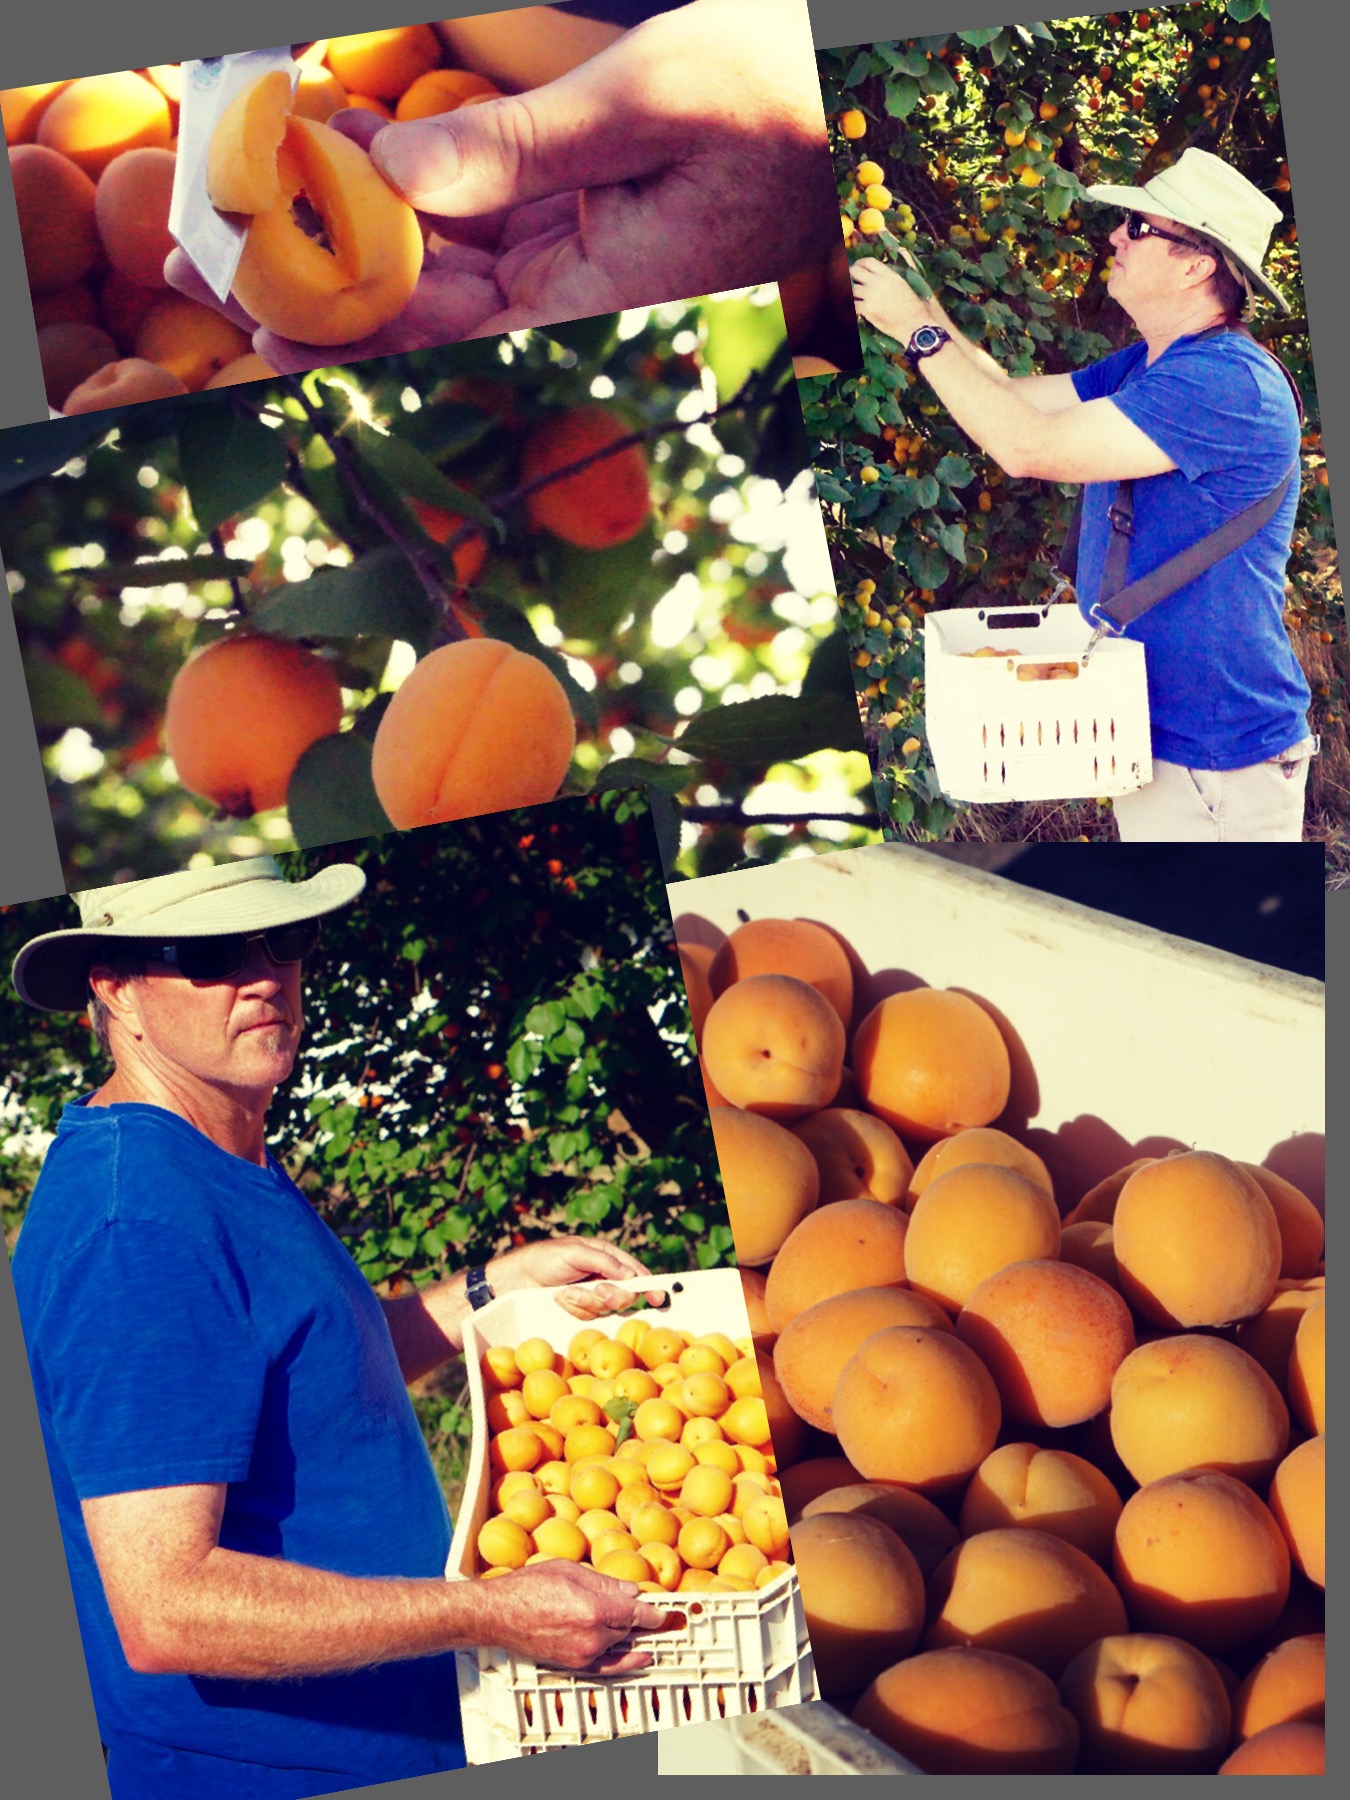 Picking Apricots at Two Sisters U-Pick Farm